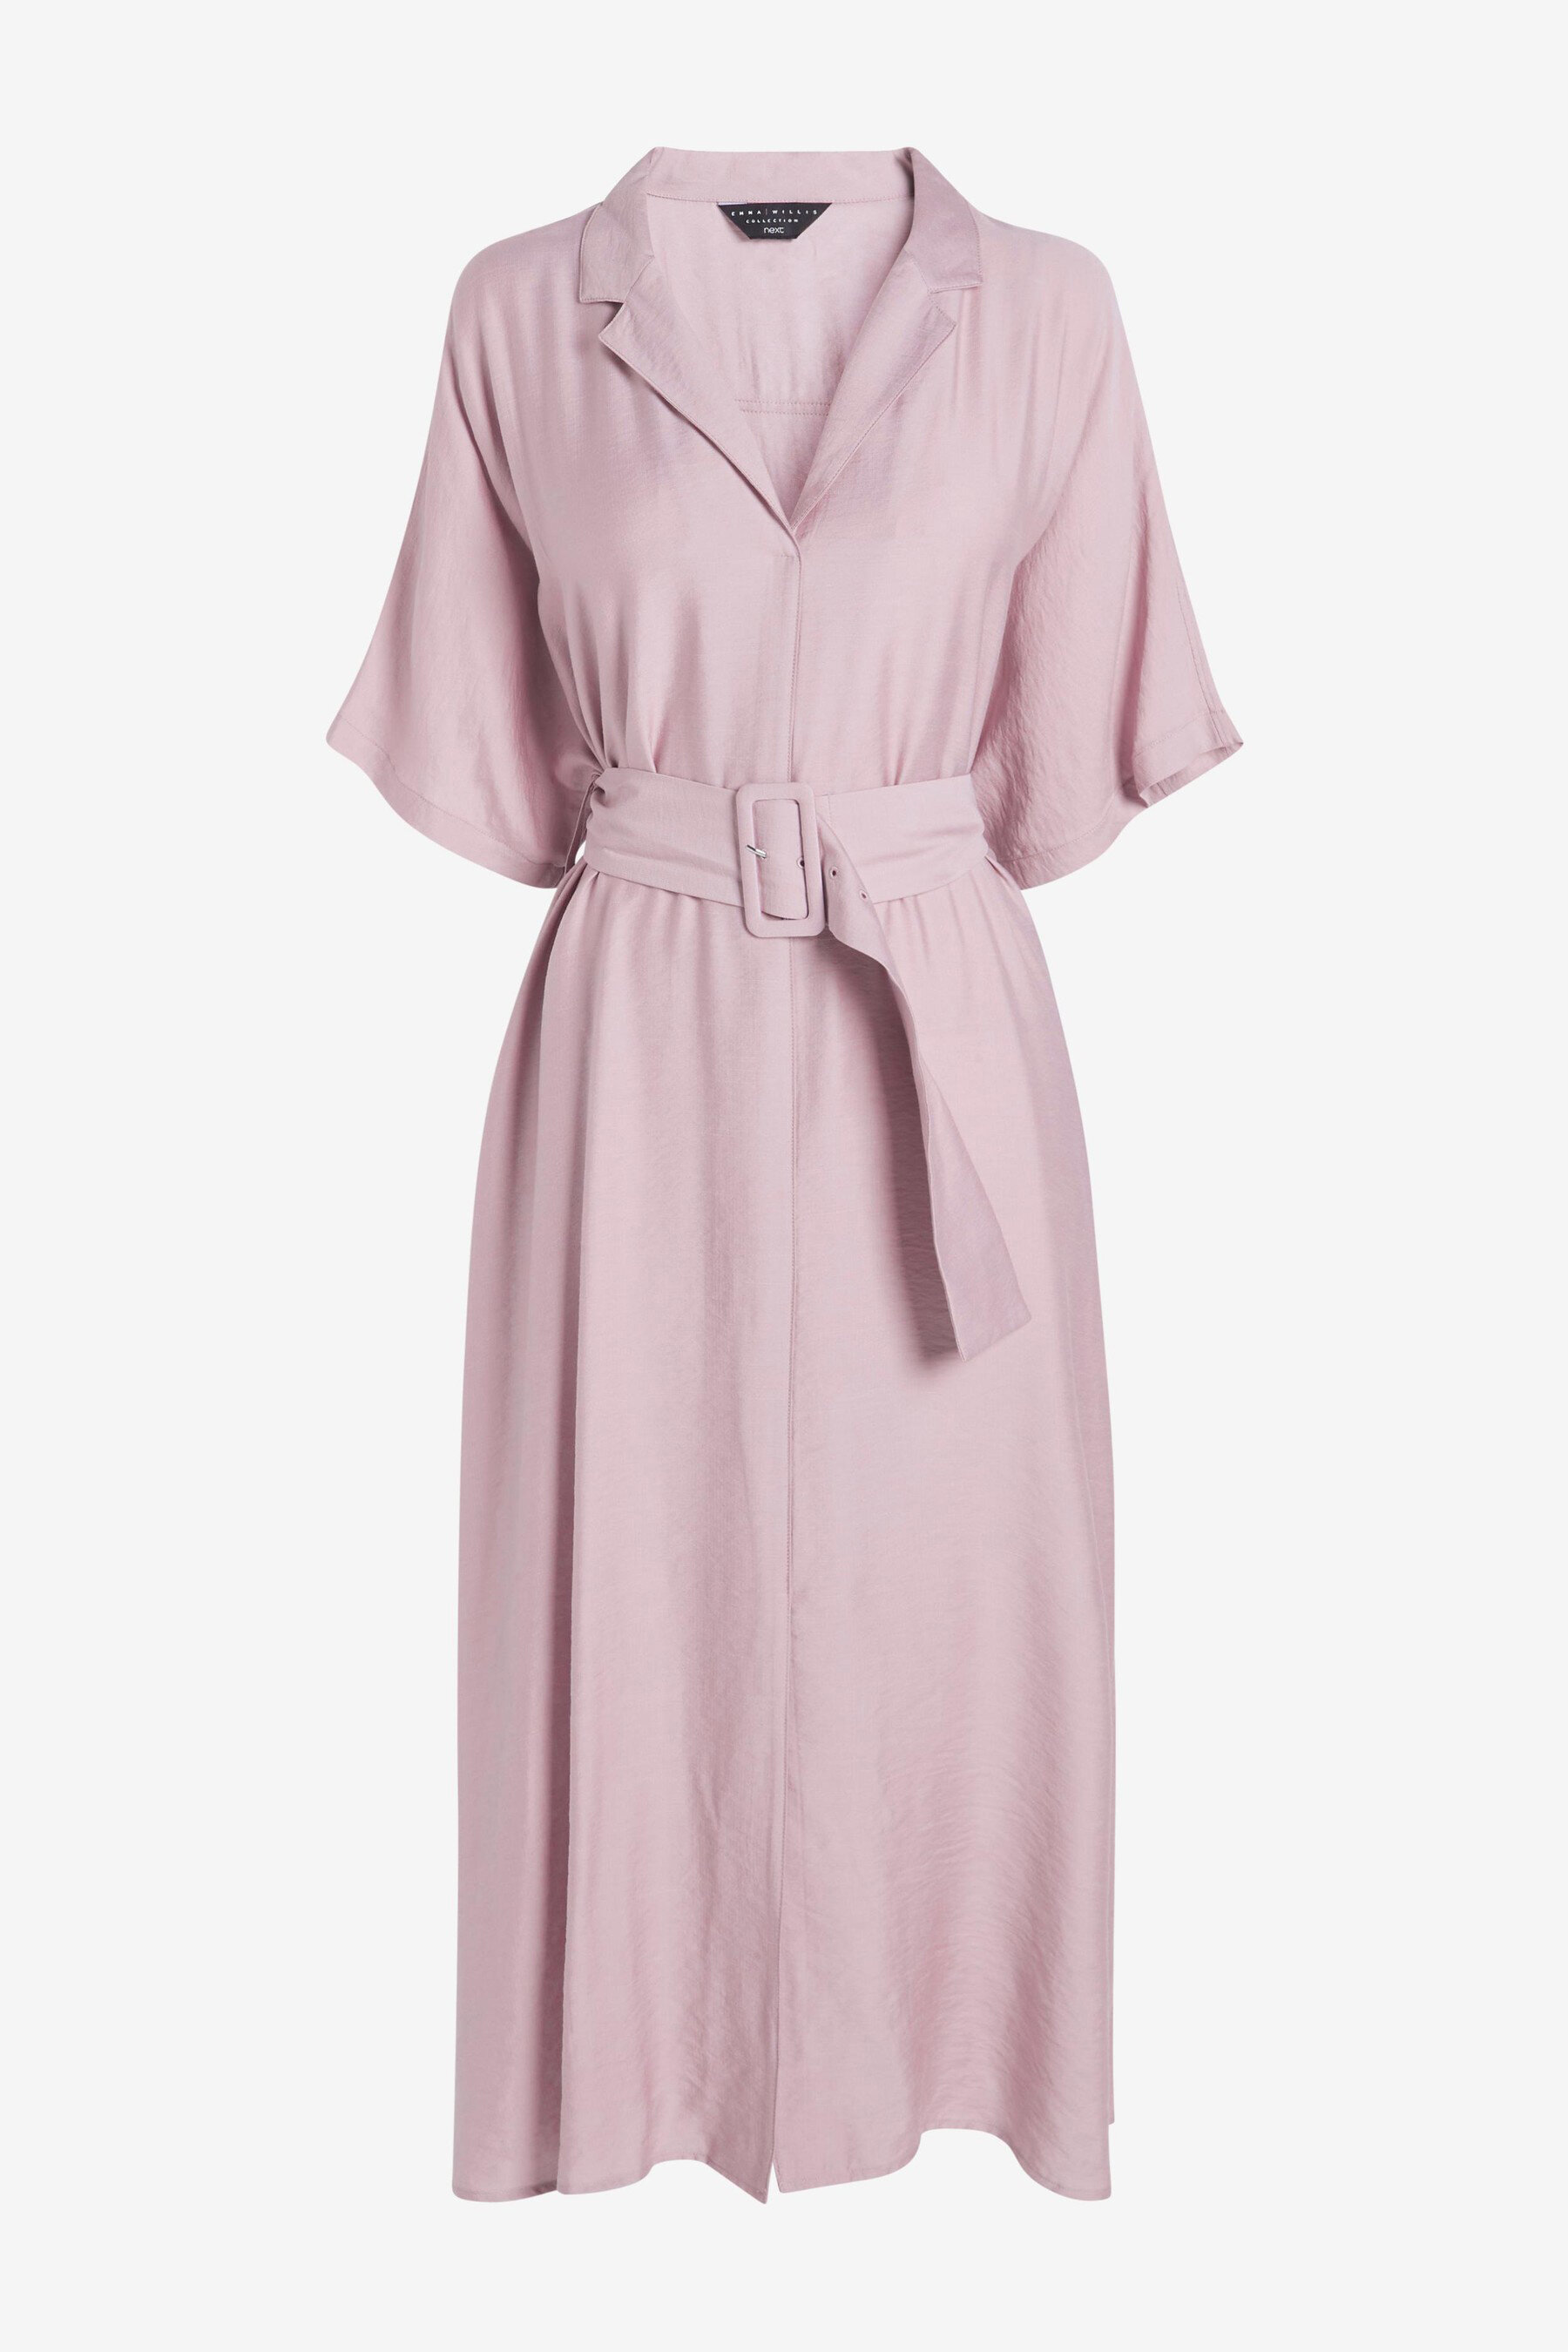 Emma Willis dress, £55.jpg